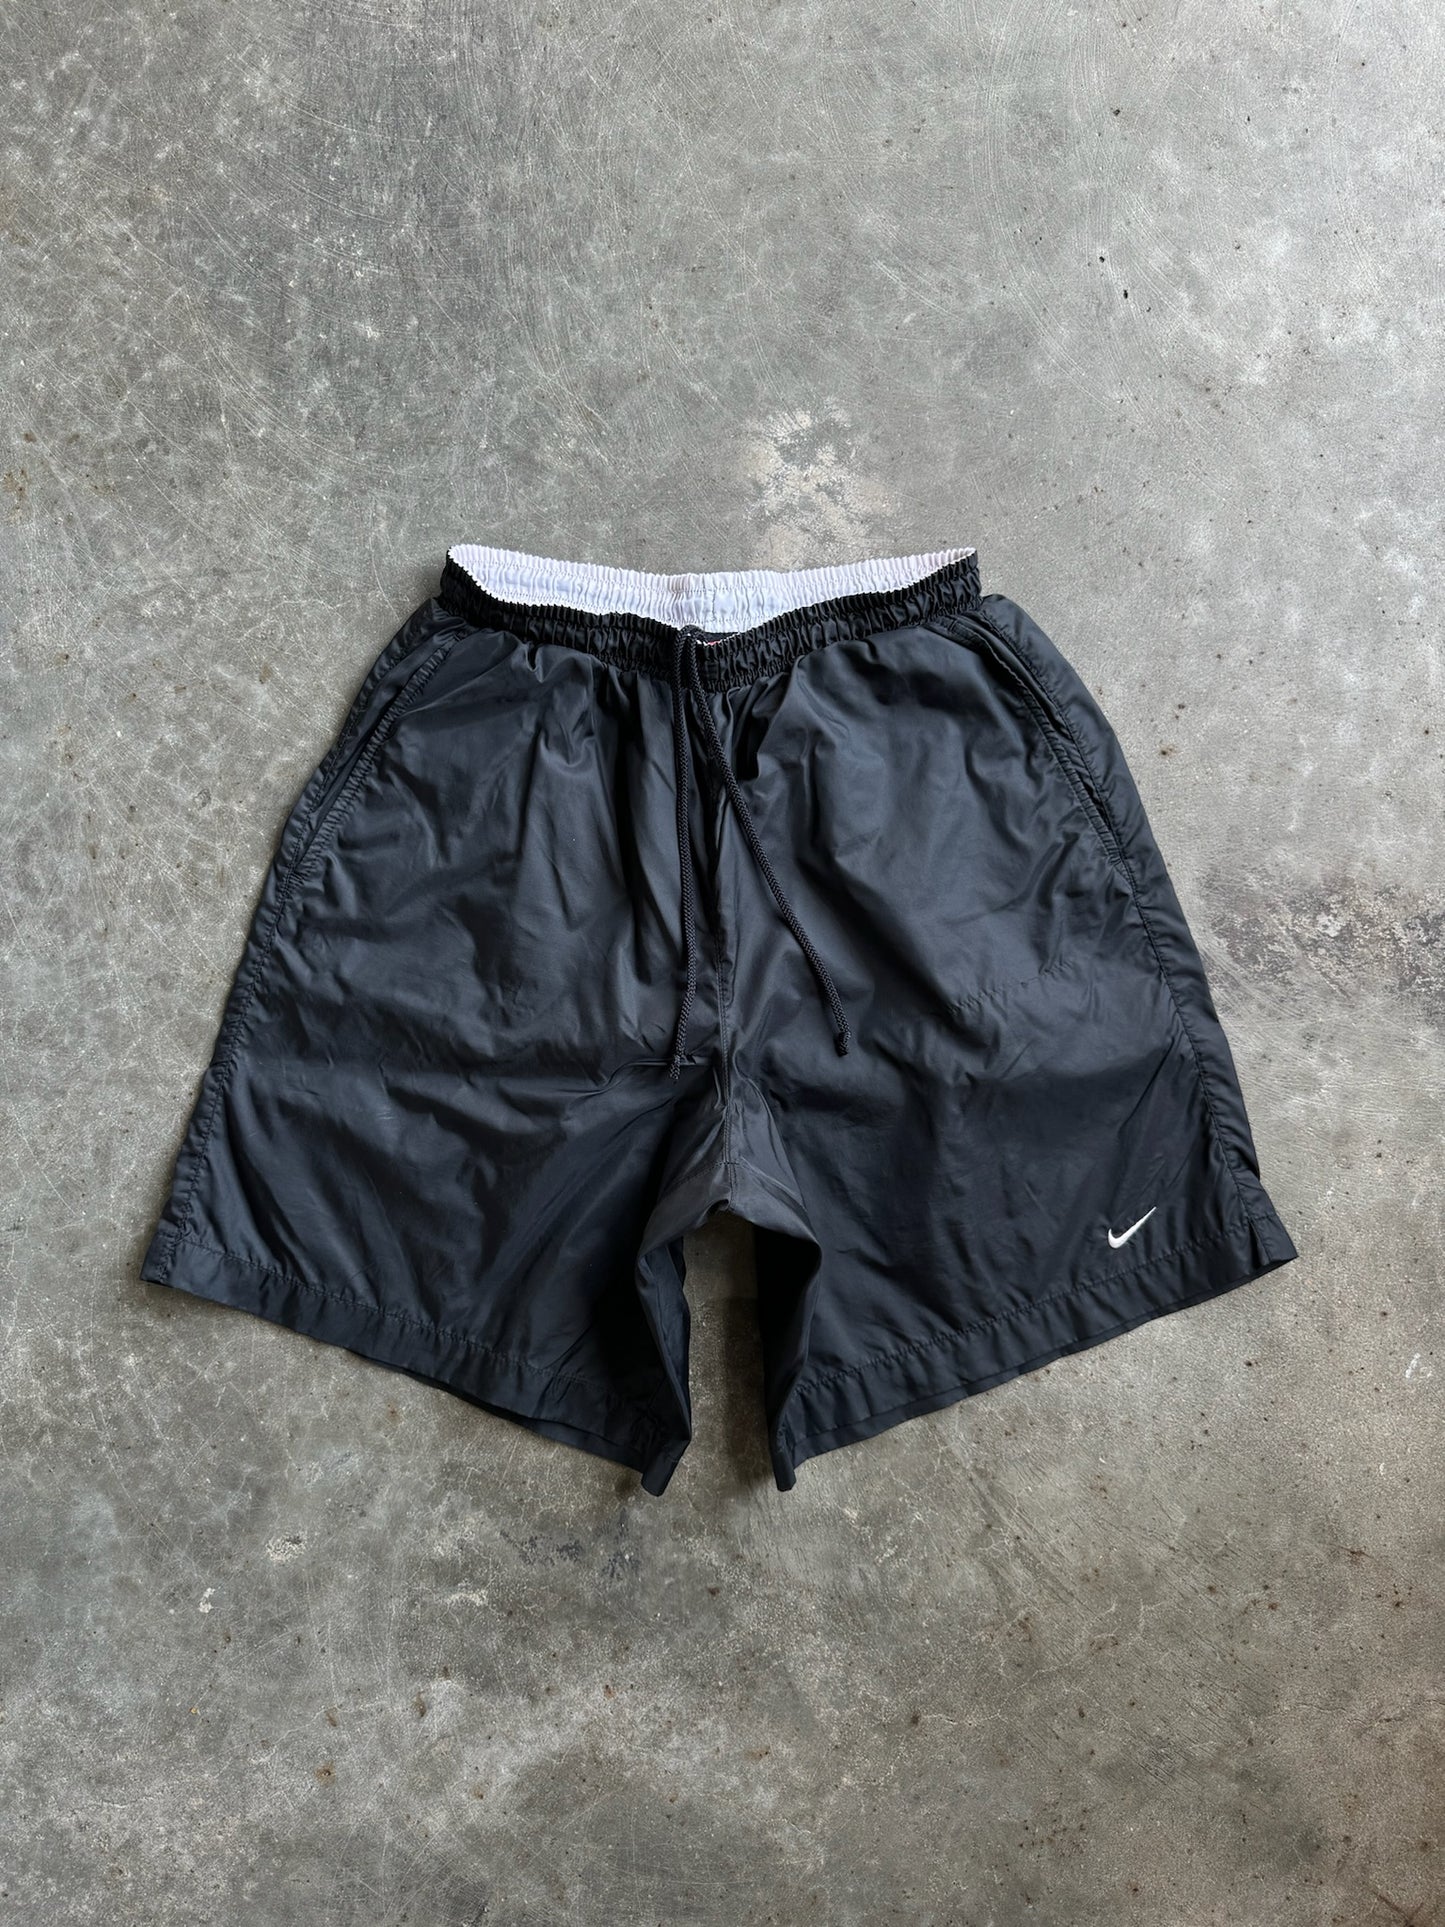 Vintage Reworked Black Nike Shorts - M